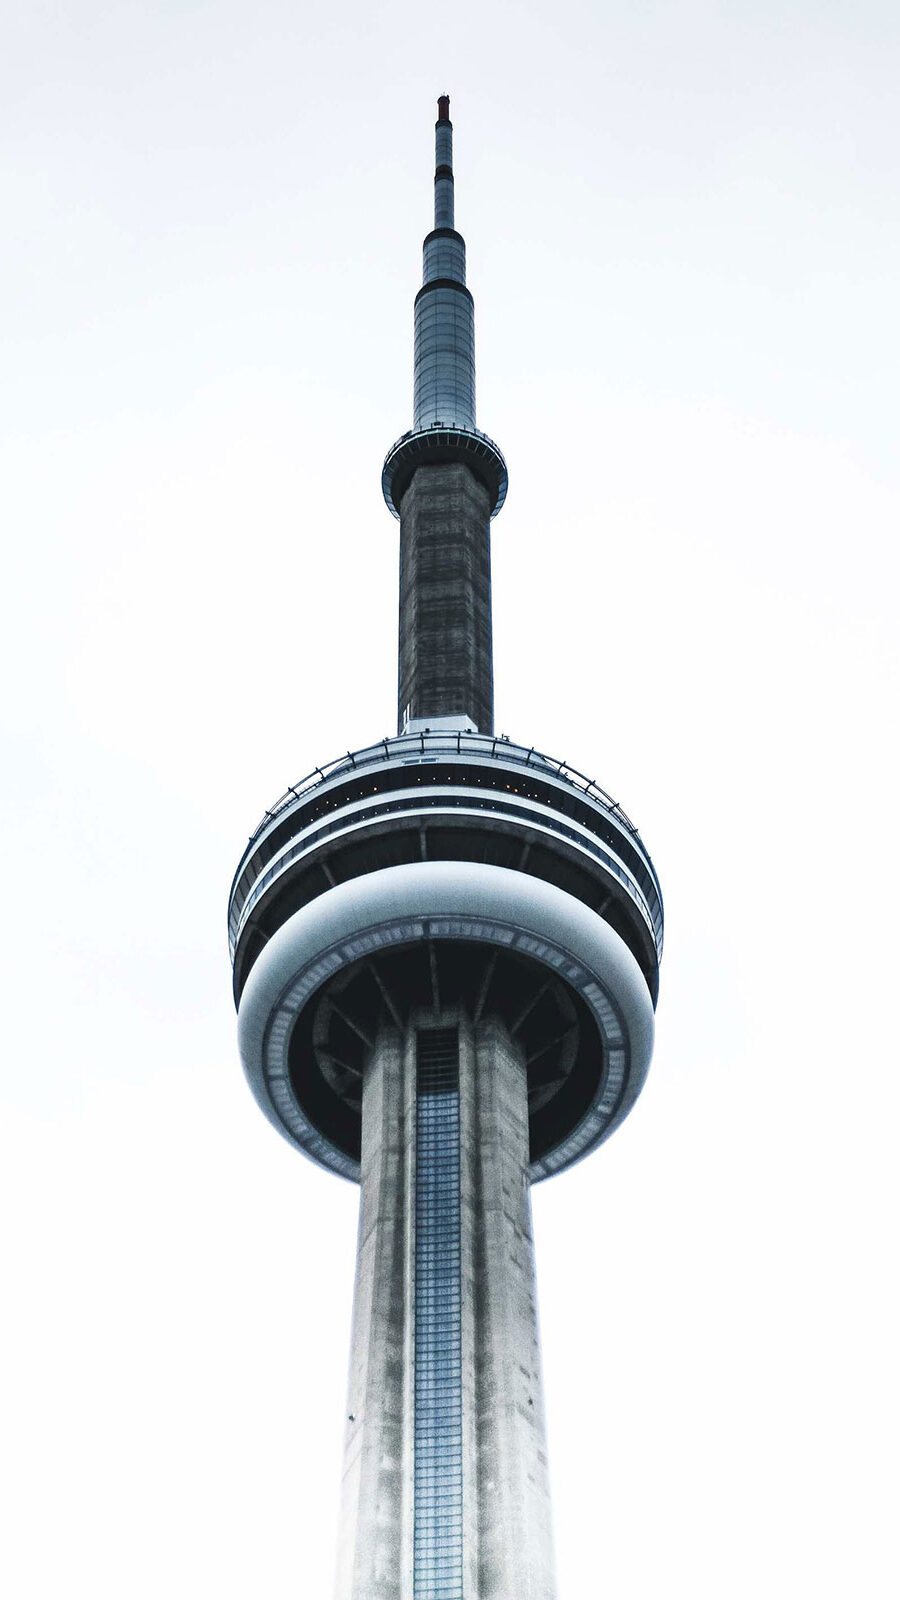 CN Tower in Toronto view from below. Photographer: Ferdinand Stohr